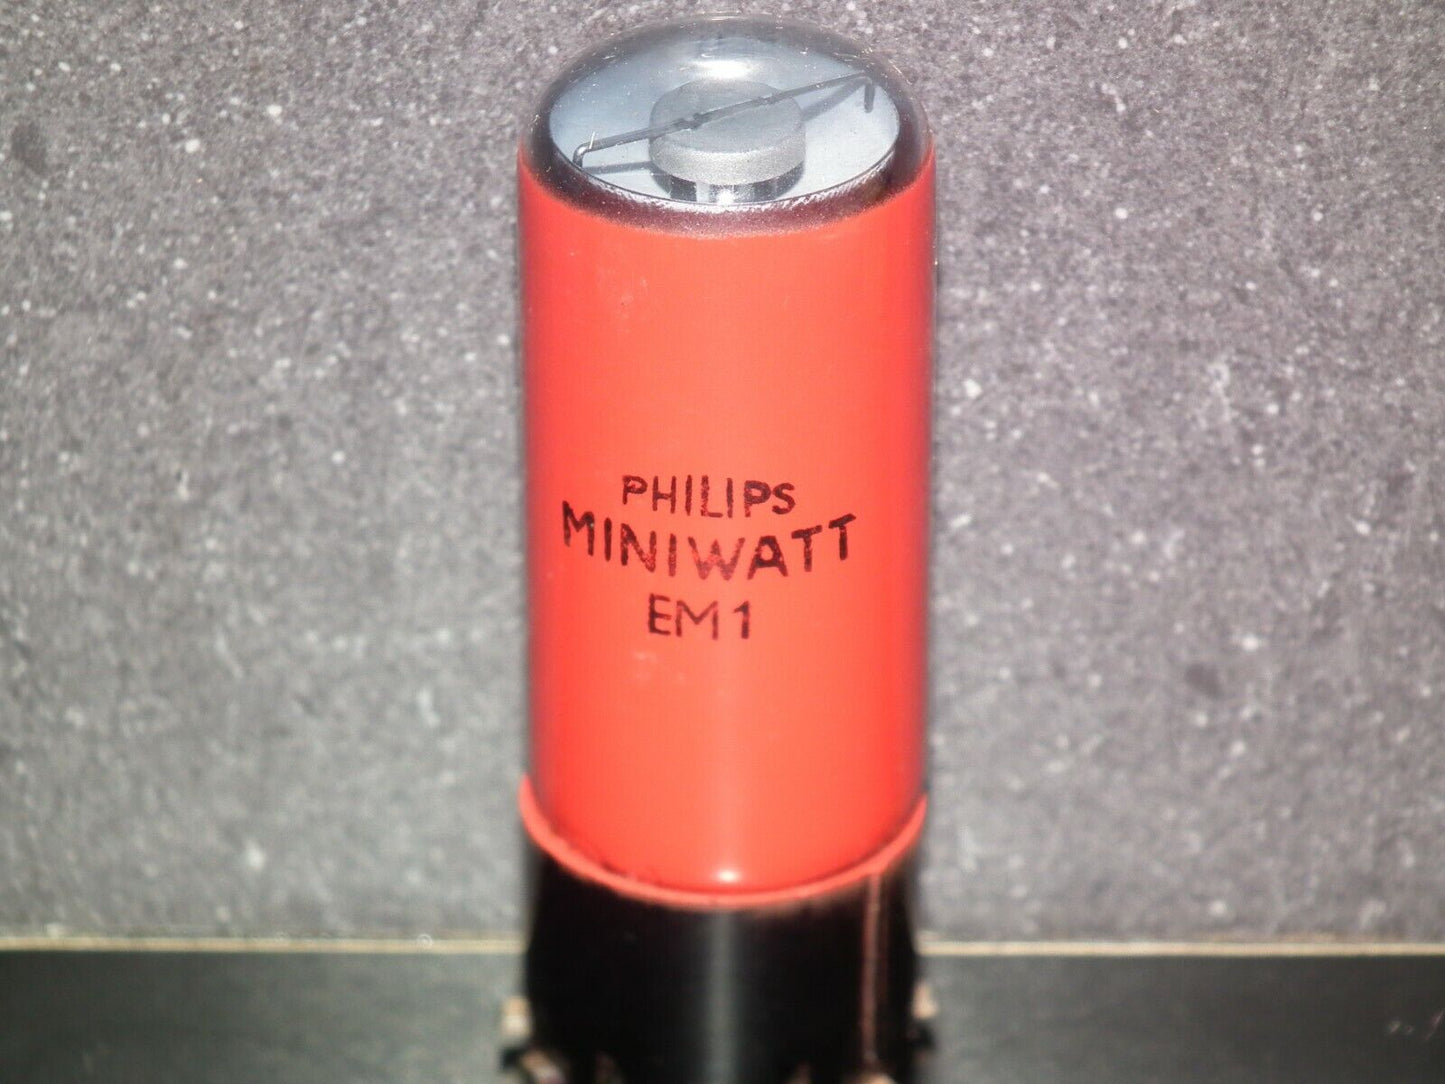 EM1 Philips Miniwatt Magic Eye Tuning Eye for Old European Tube Radio Receivers